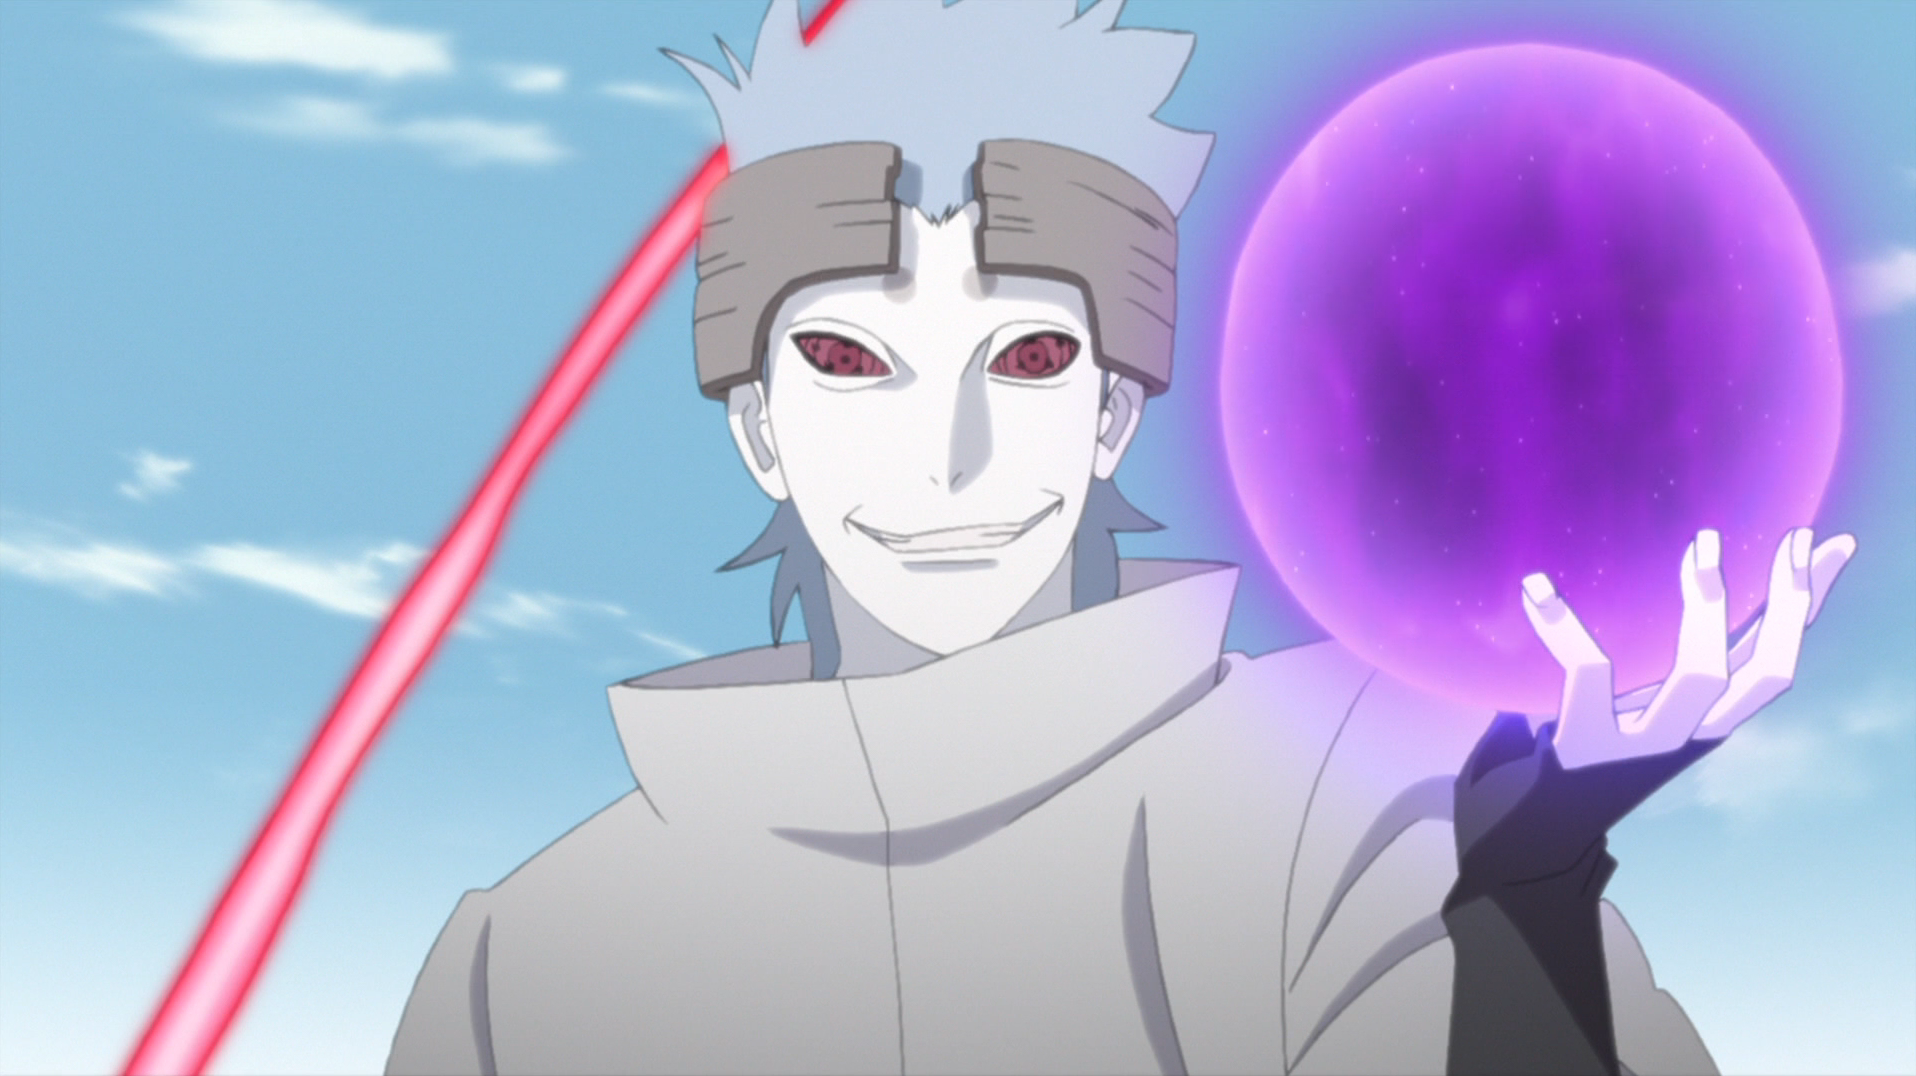 Naruto's Nindo - Boruto Episode 62 spoilers!! Urashiki uses Rinnegan -  Mitsuki activates Sage Mode but Urashiki absorbs all the chakra. - Urashiki  absorbed Gaara's chakra and can use his Sand jutsu.